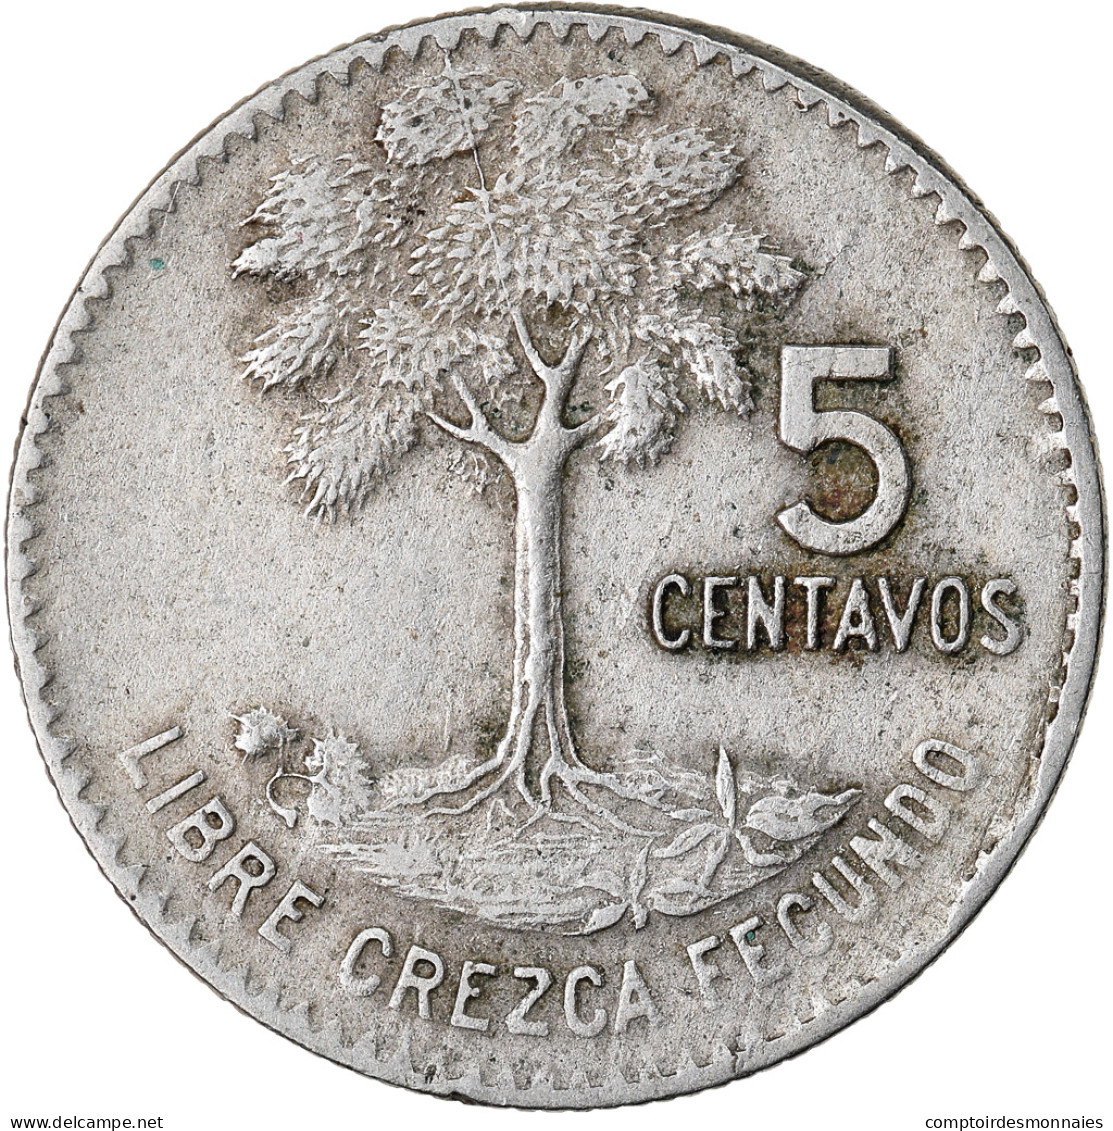 Monnaie, Guatemala, 5 Centavos, 1967, TTB, Copper-nickel, KM:266.1 - Guatemala